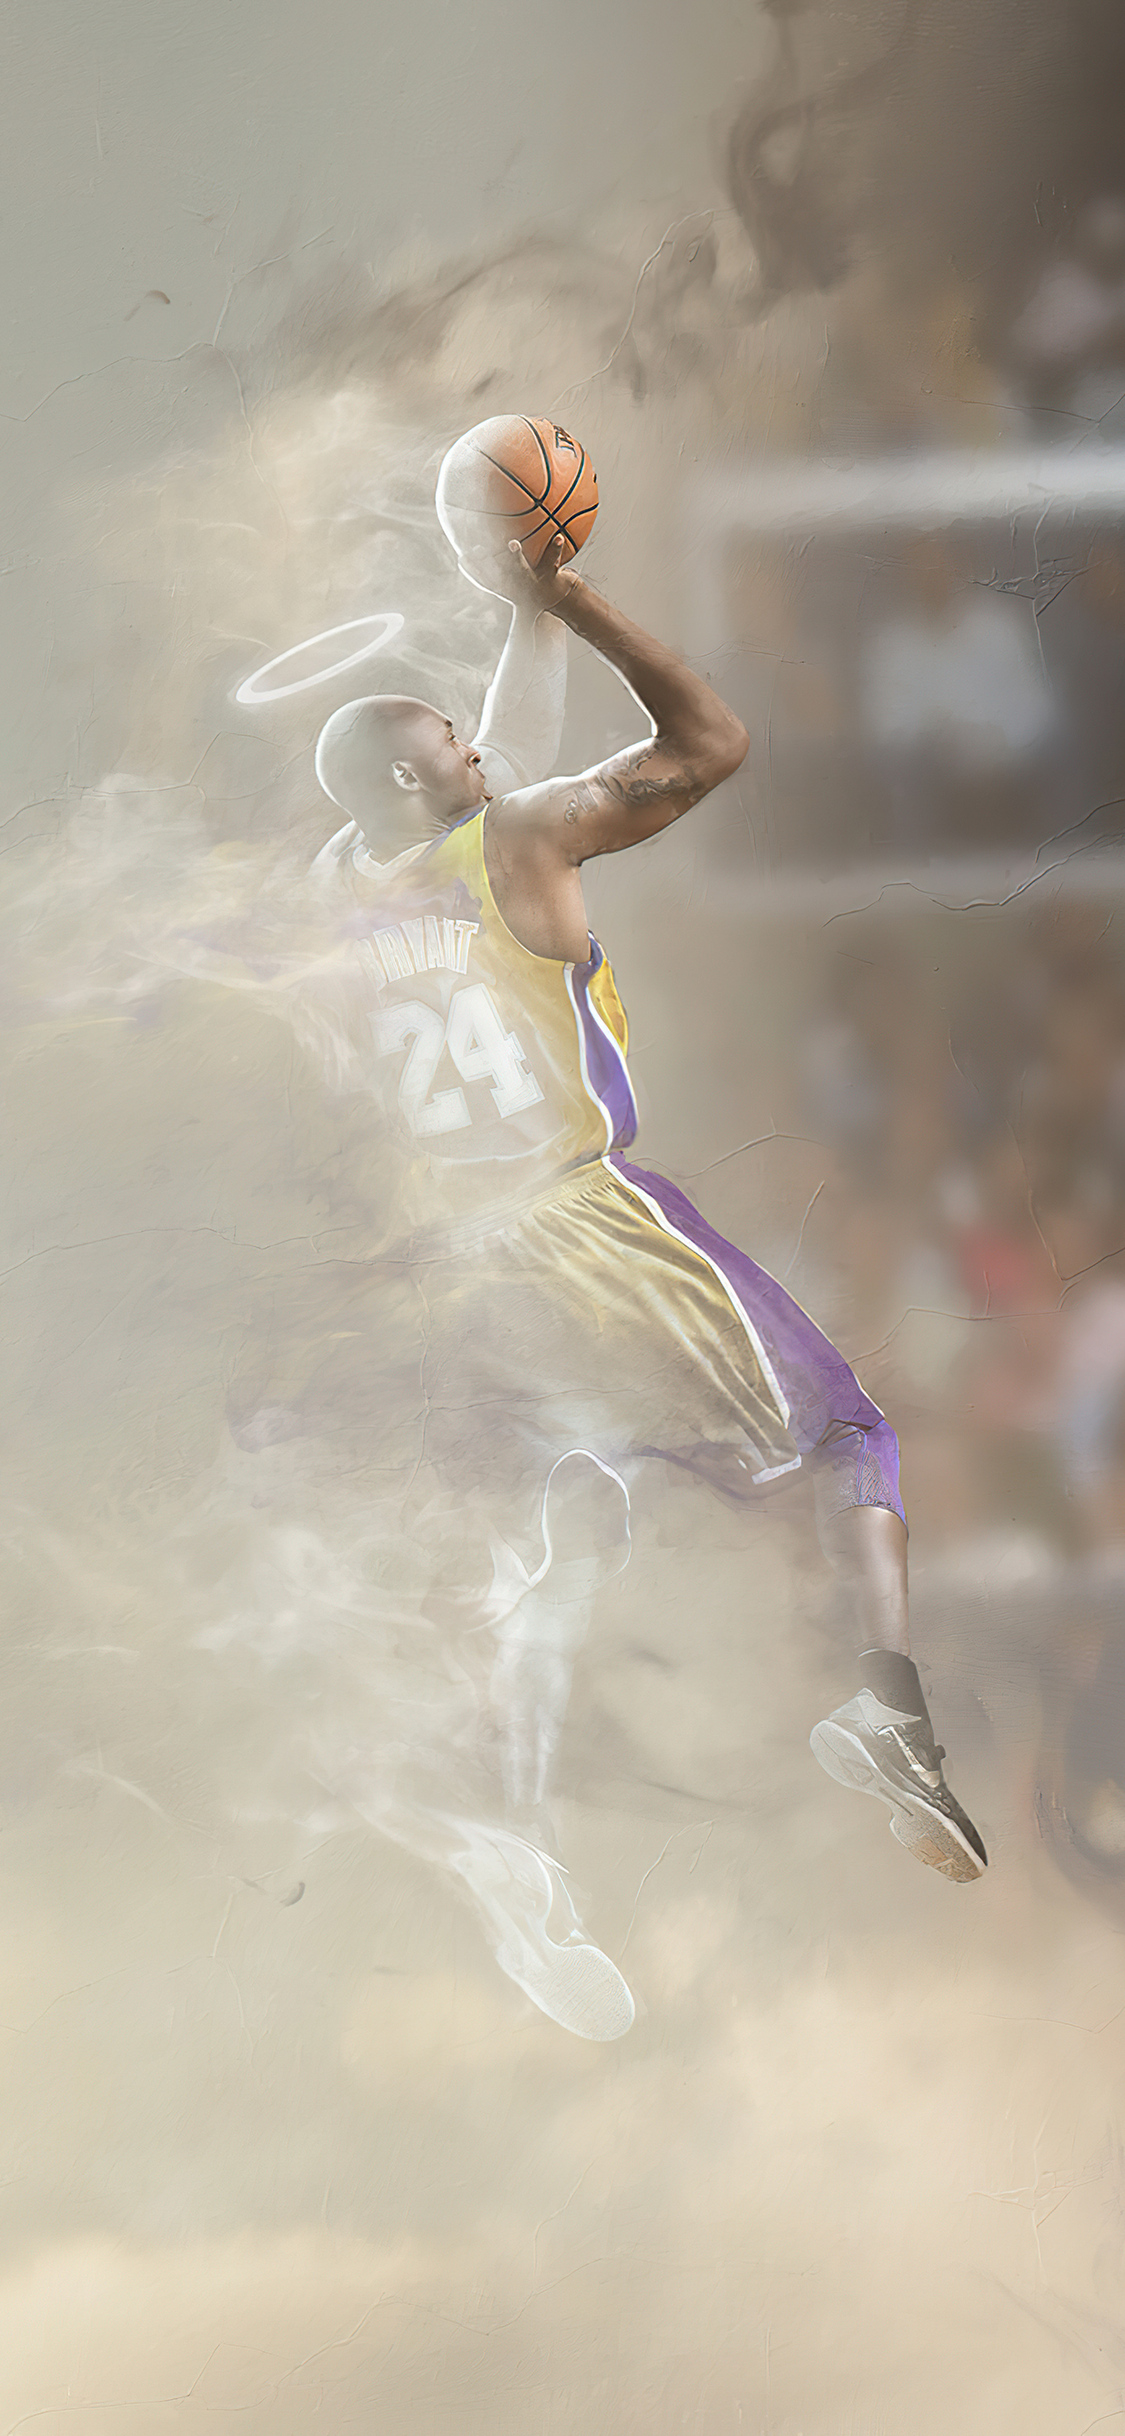 Wallpaper Field Basketball Kobe Bryant Slam Dunk Hang Player Take  flight Running images for desktop section спорт  download